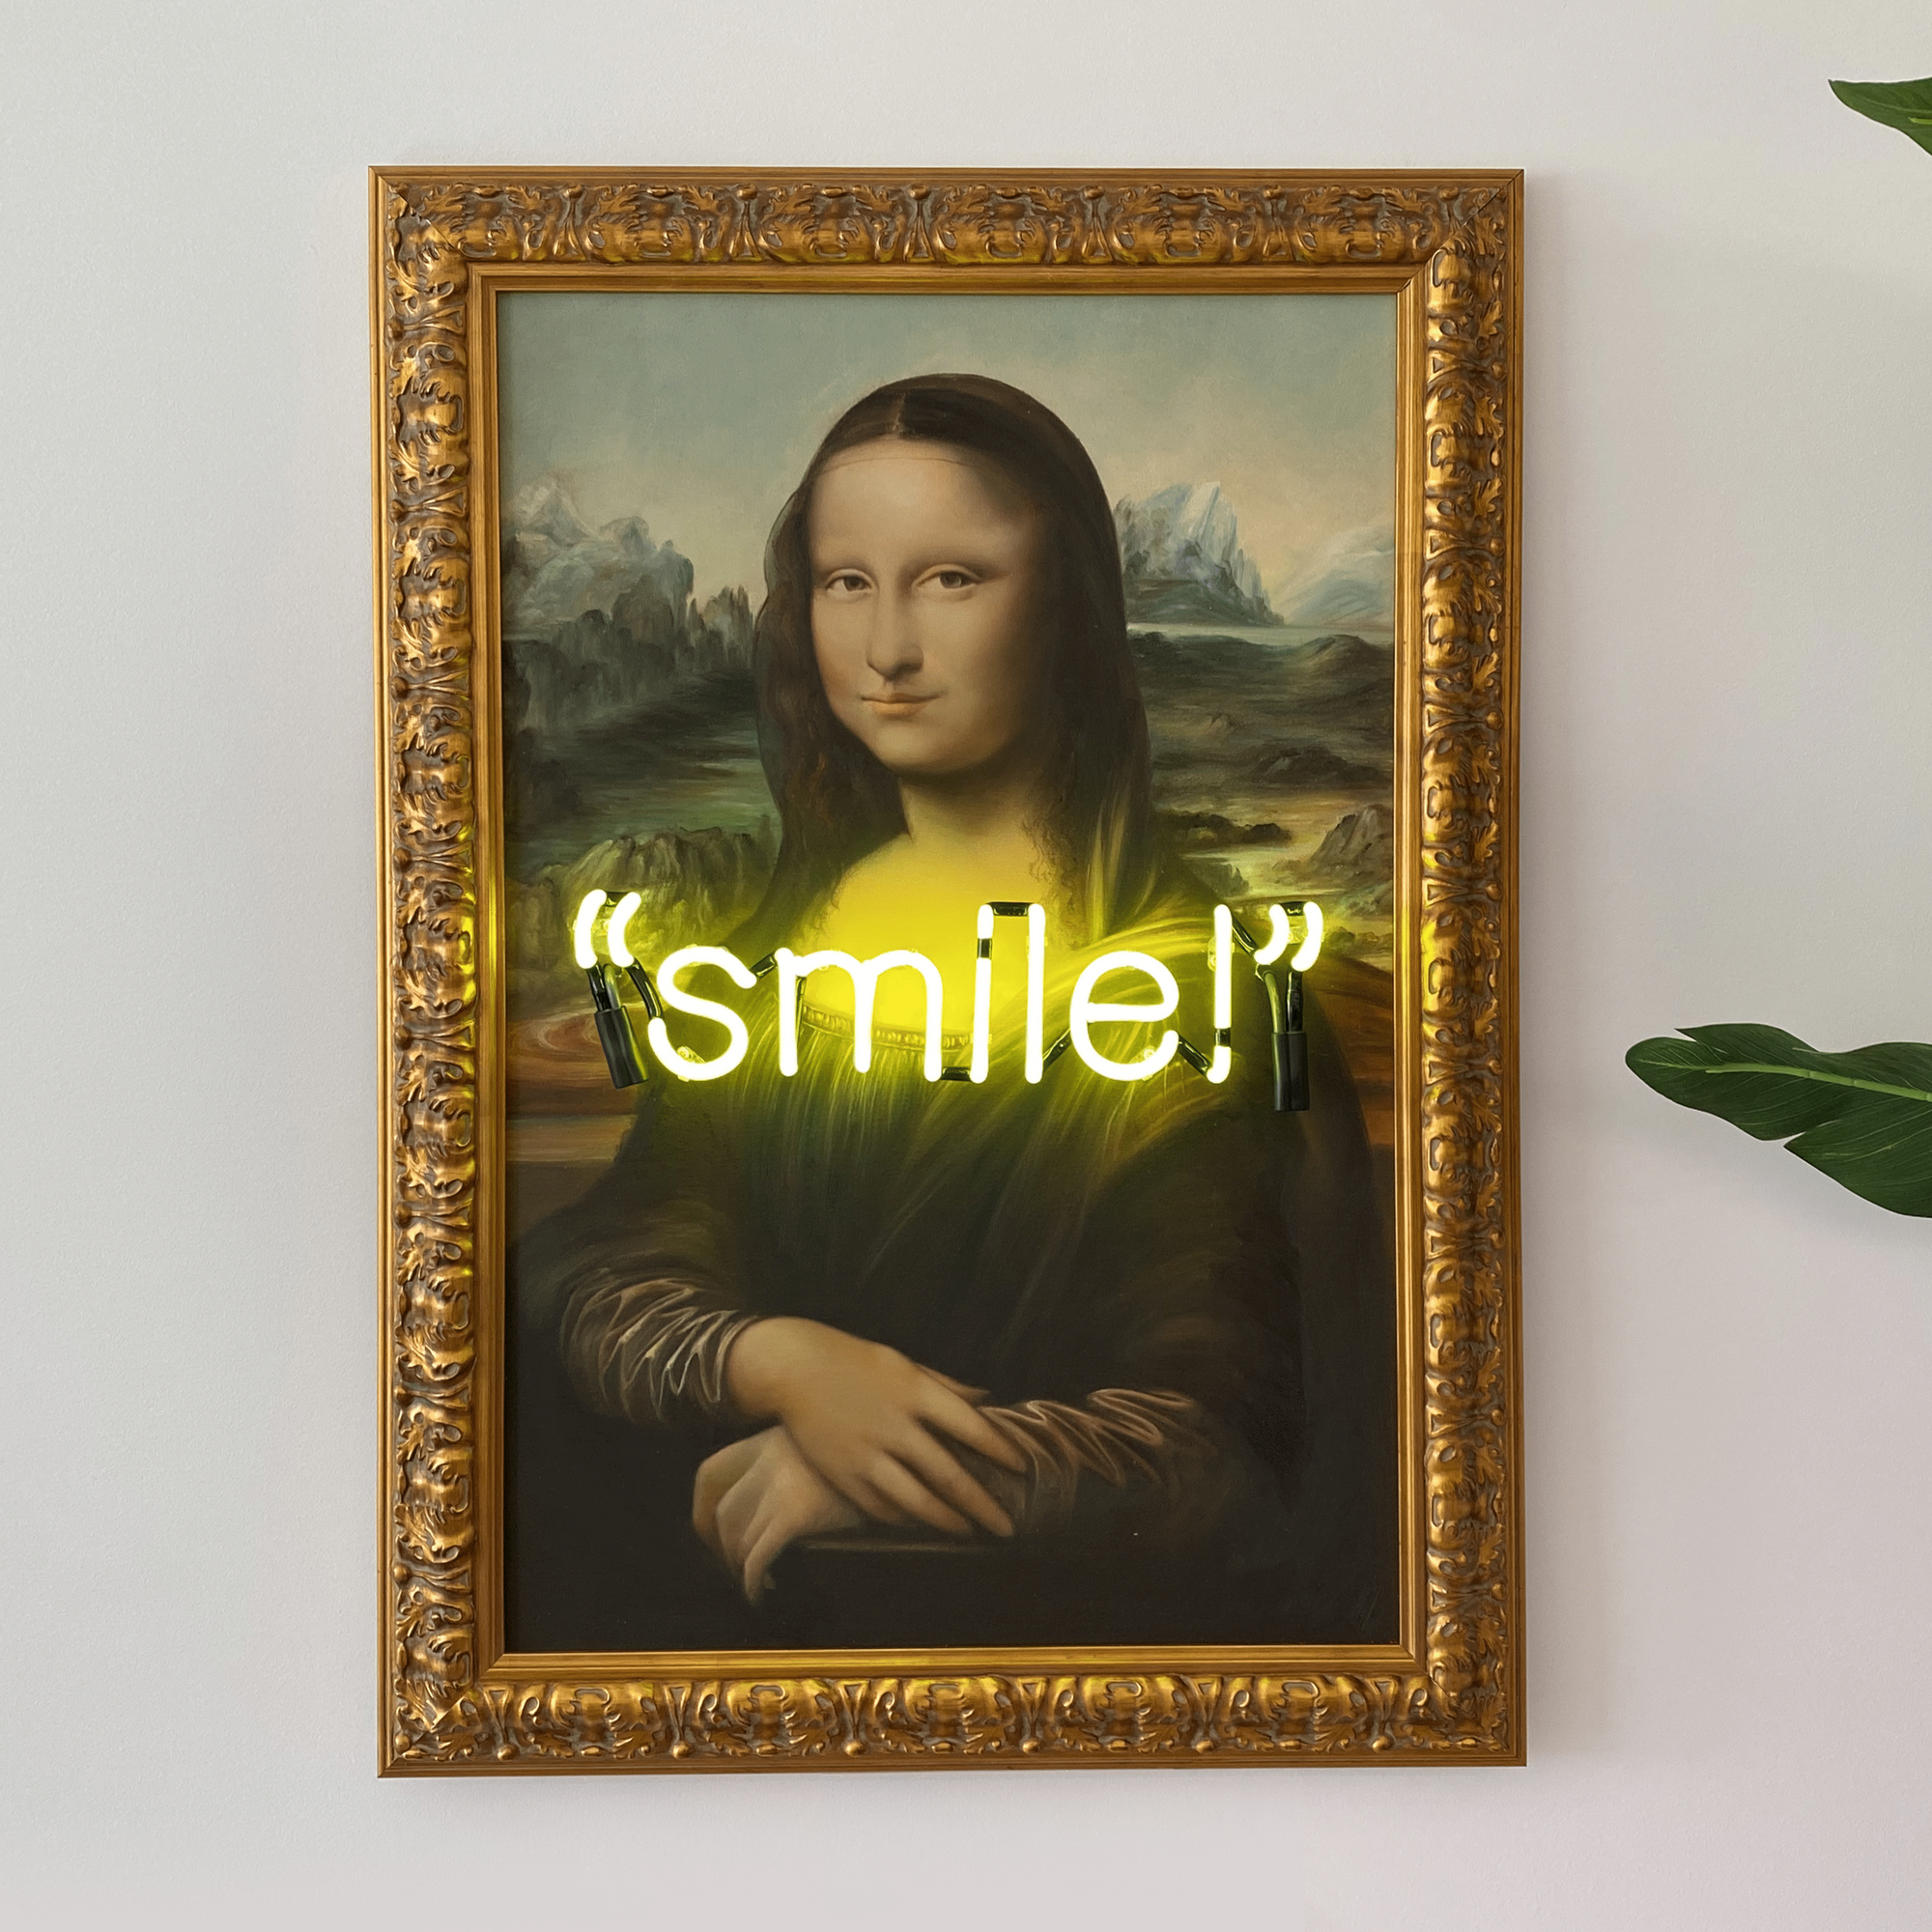 Mona Lisa "Smile" Neon Sign Wall Mounted